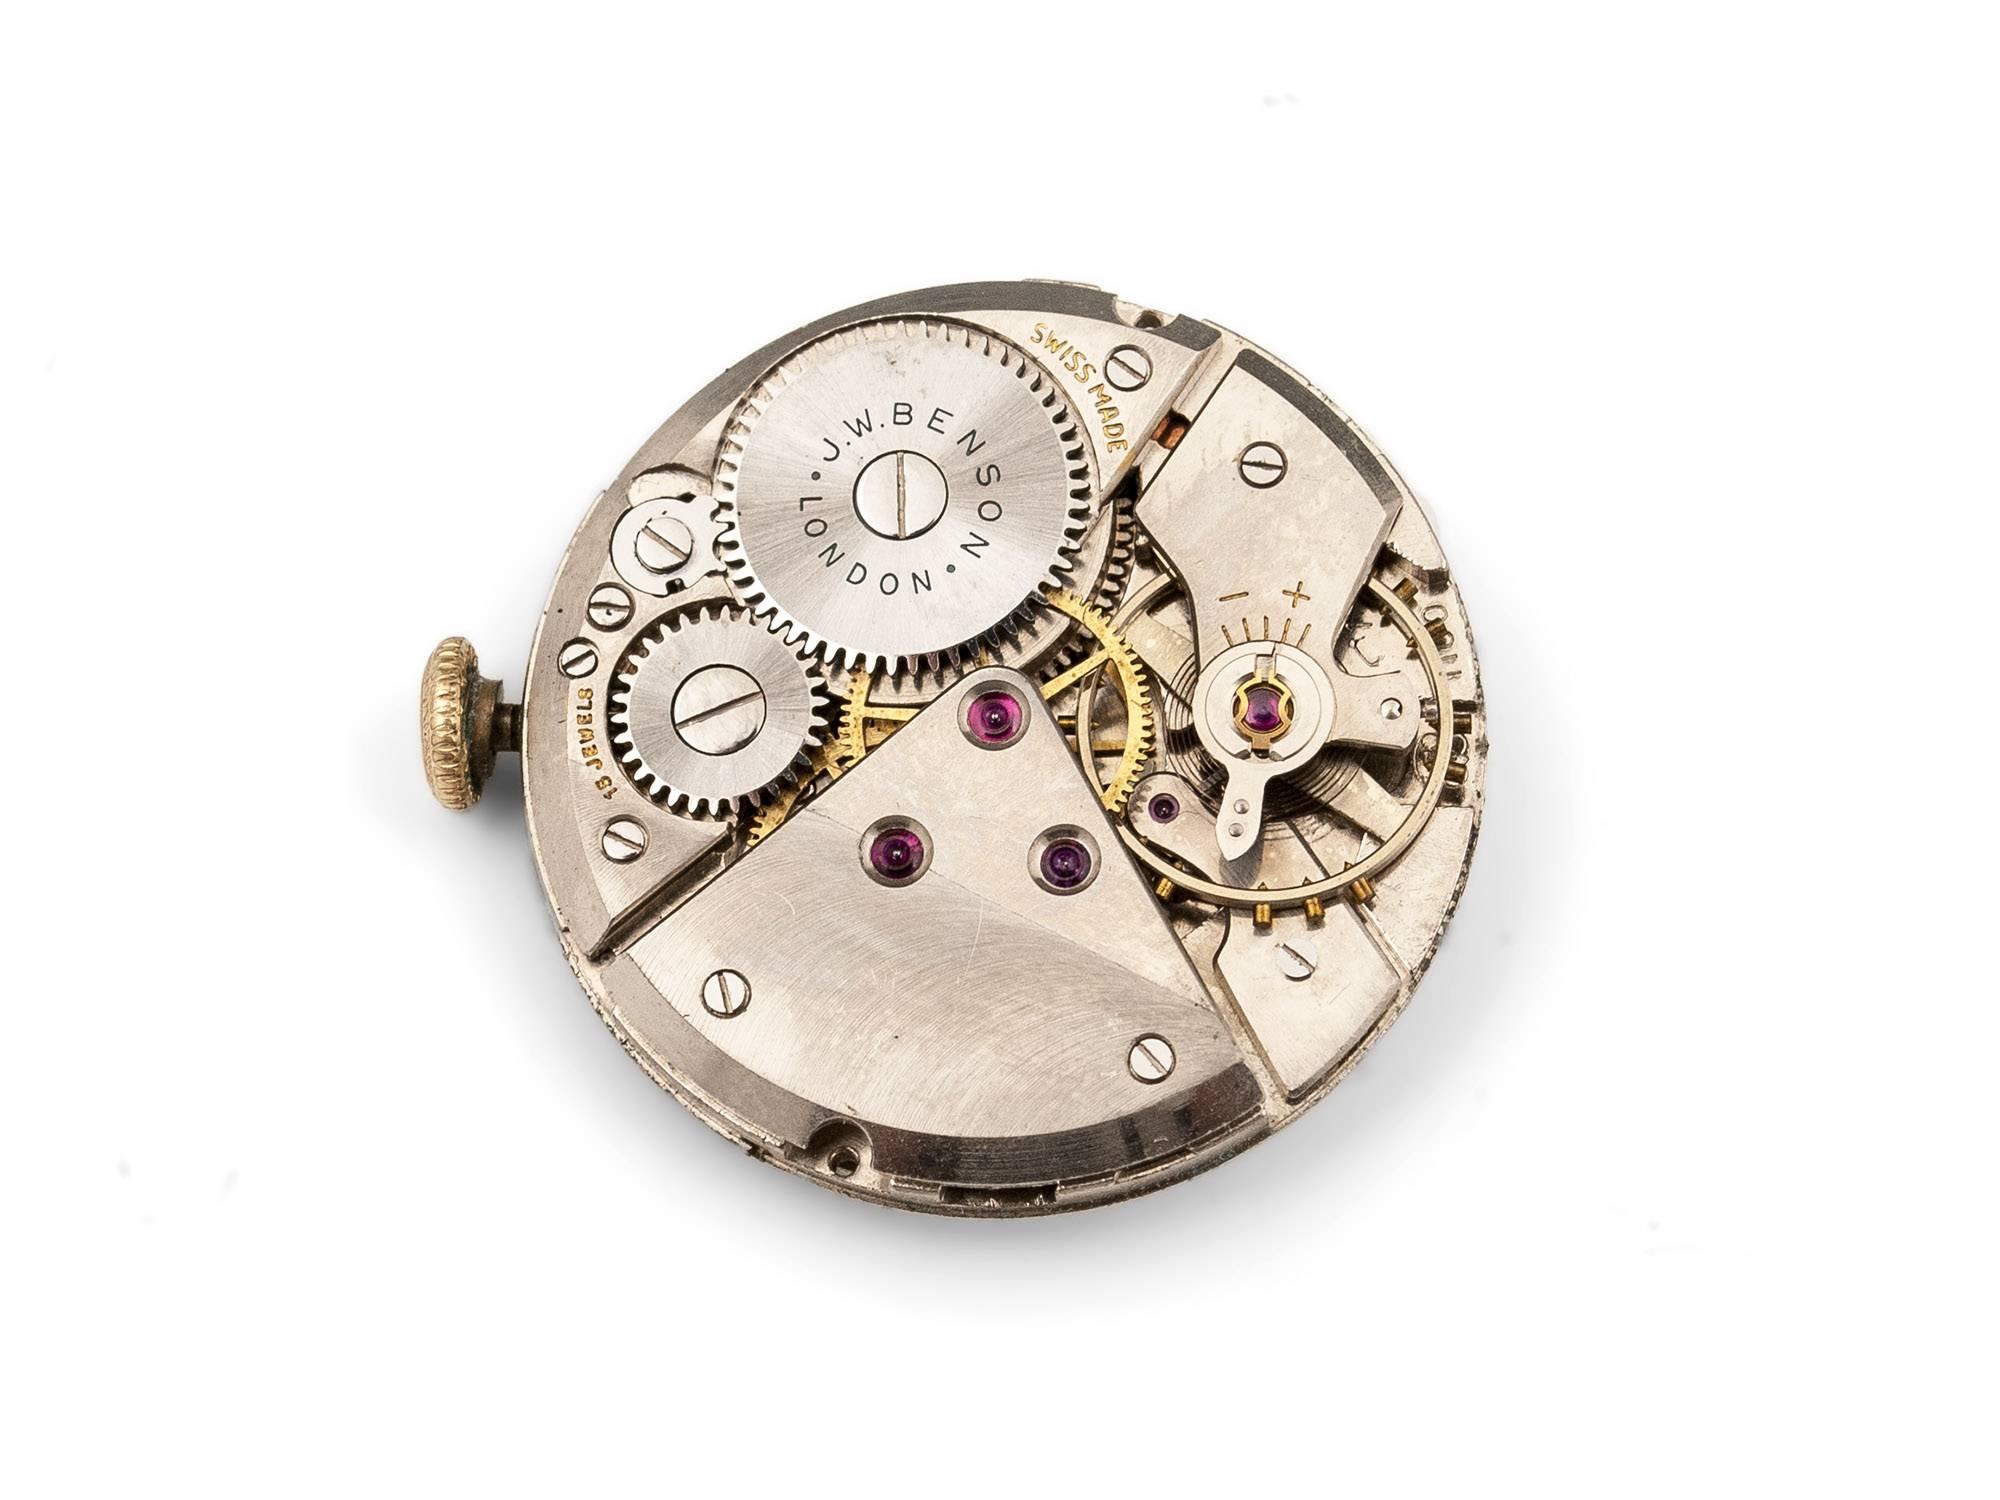 19-Carat Gold Wrist Watch by J. W. Benson 20th Century For Sale 4